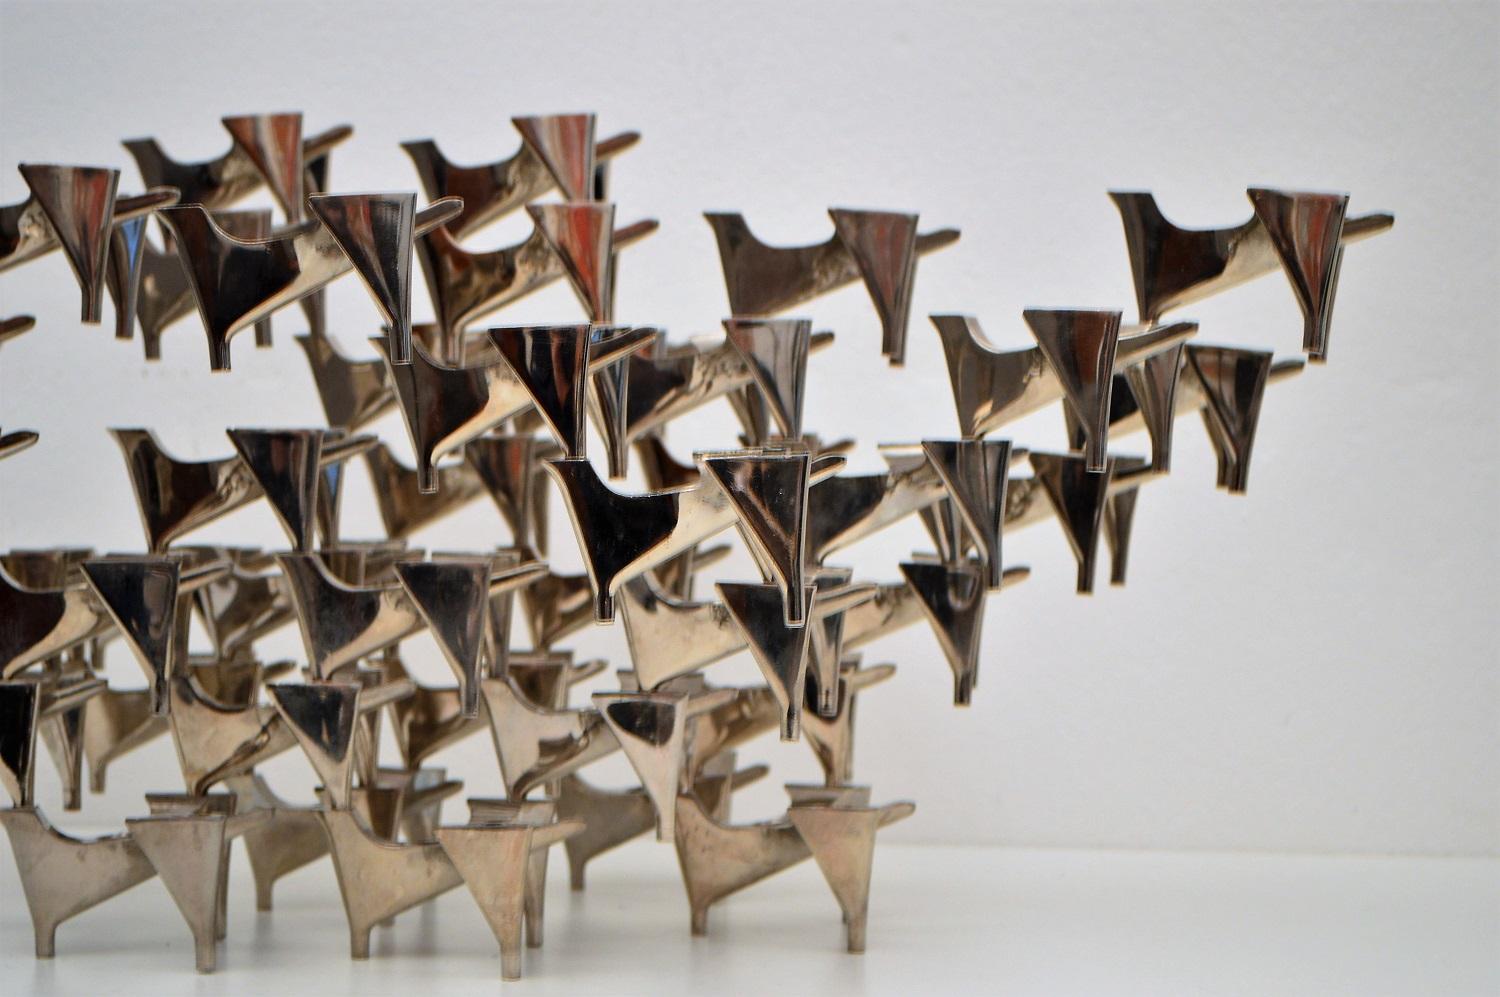 Midcentury Sculptural Candlesticks or Candle Holder Vogelflug by Hammonia, 1970s (Moderne der Mitte des Jahrhunderts)